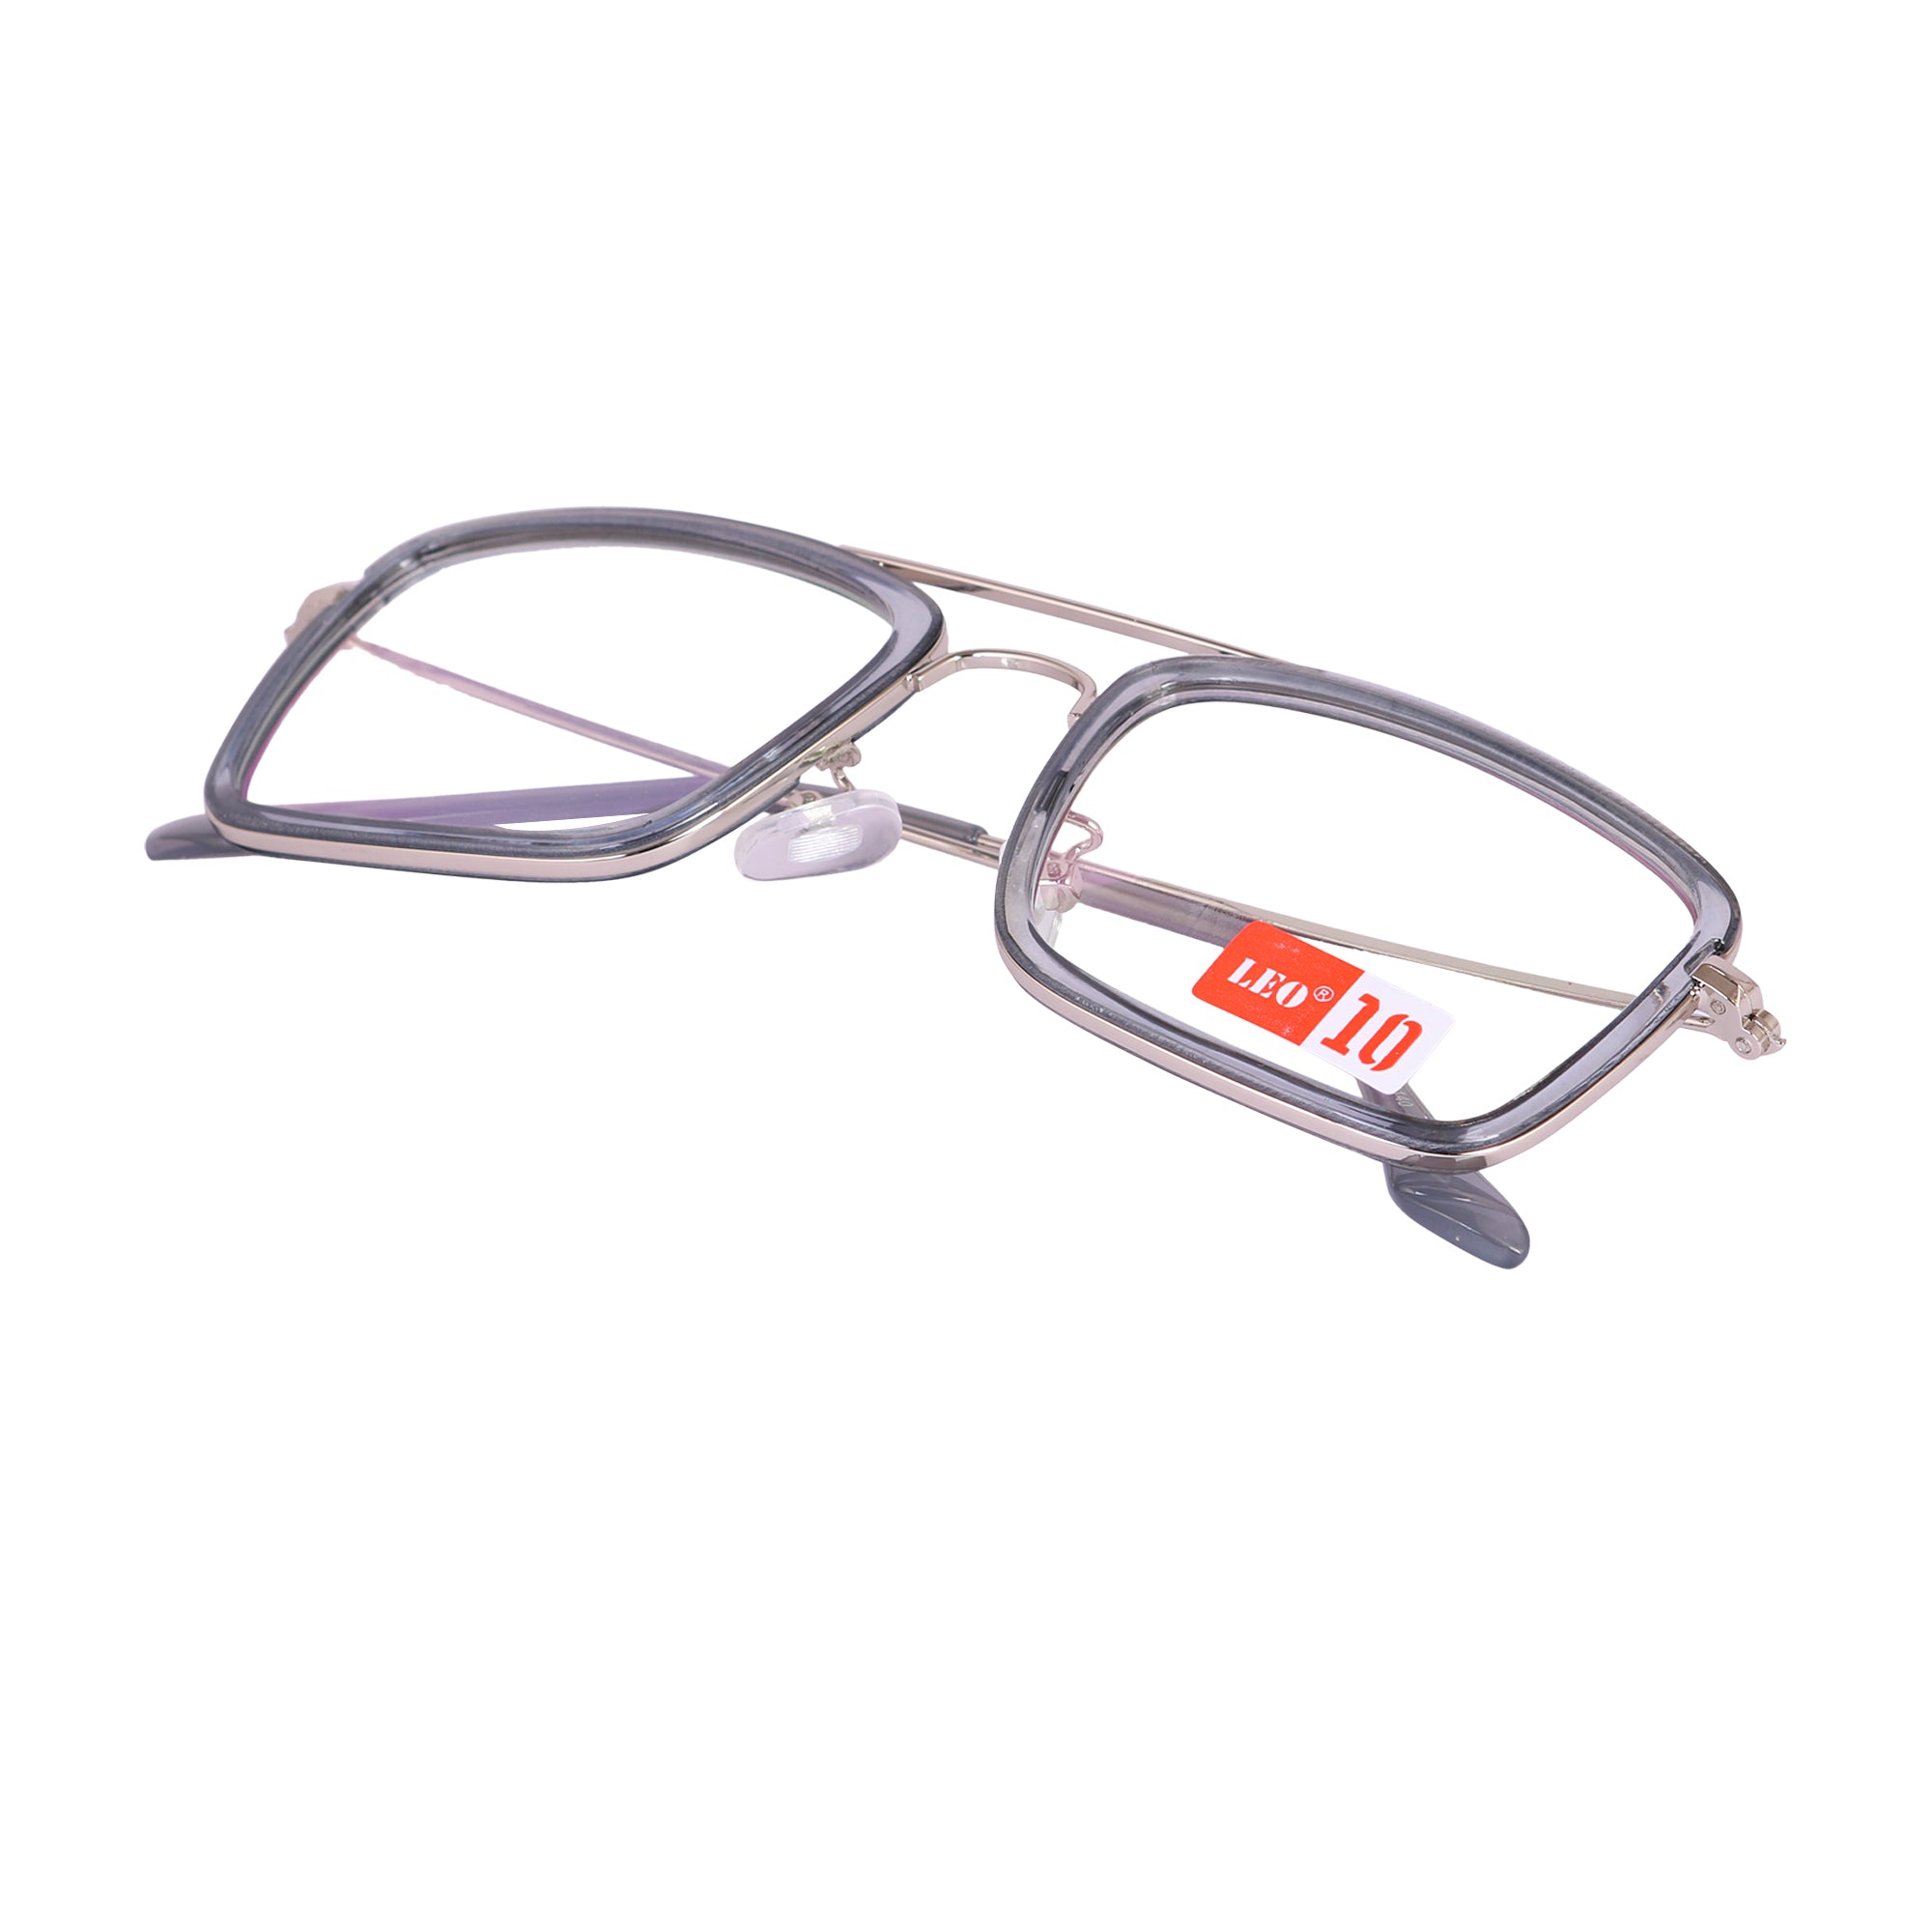 GUN SILVER Square Rimmed Eyeglasses - L16006